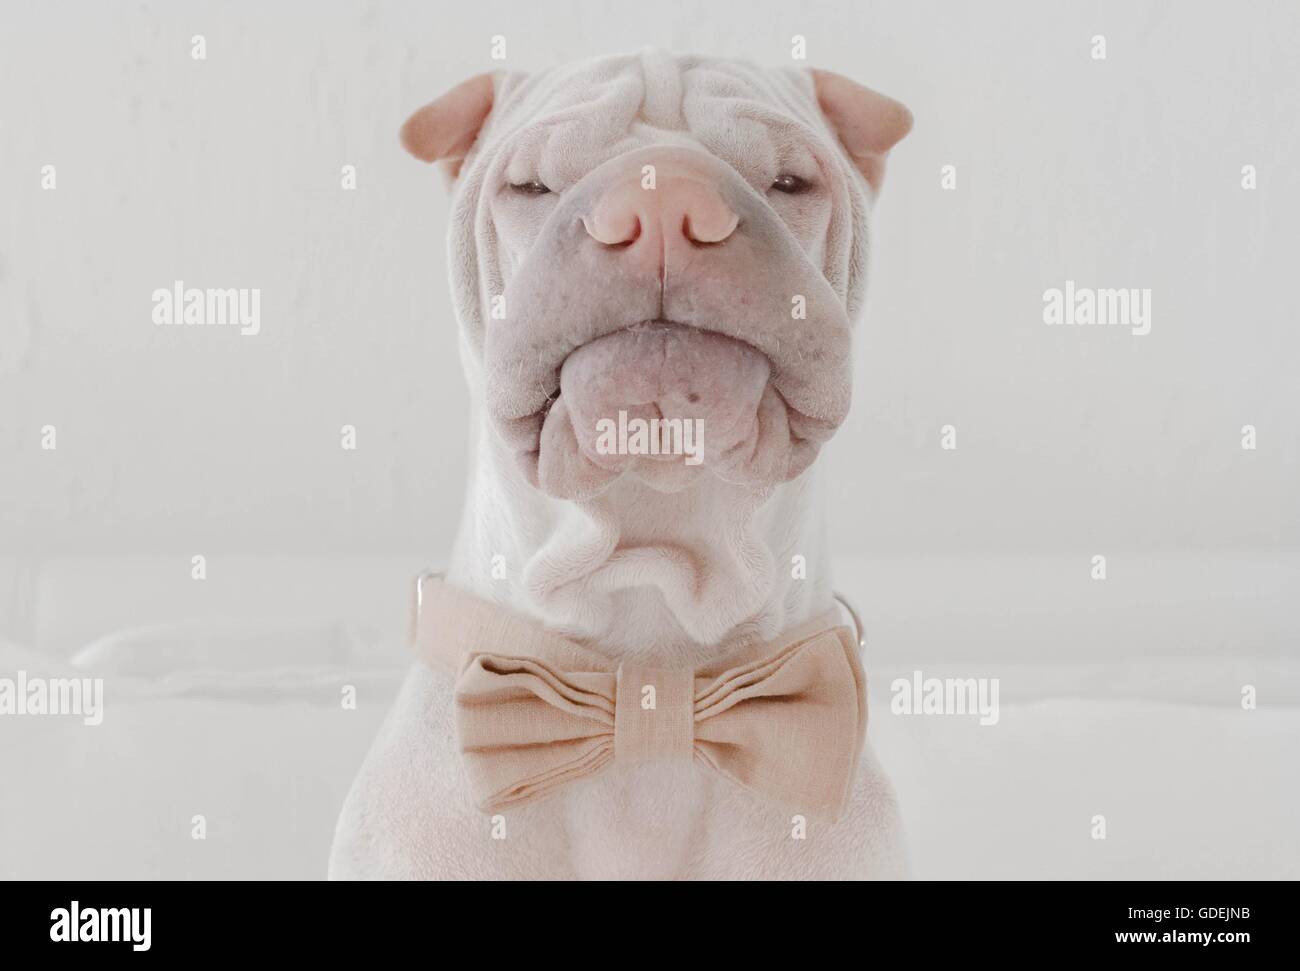 Shar Pei dog wearing bow tie Stock Photo